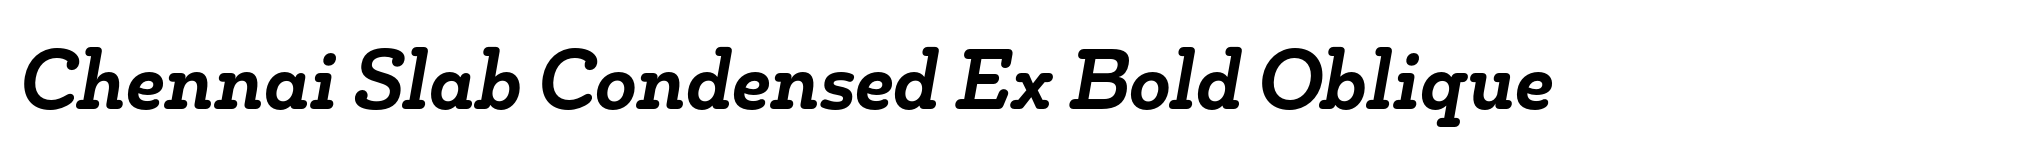 Chennai Slab Condensed Ex Bold Oblique image